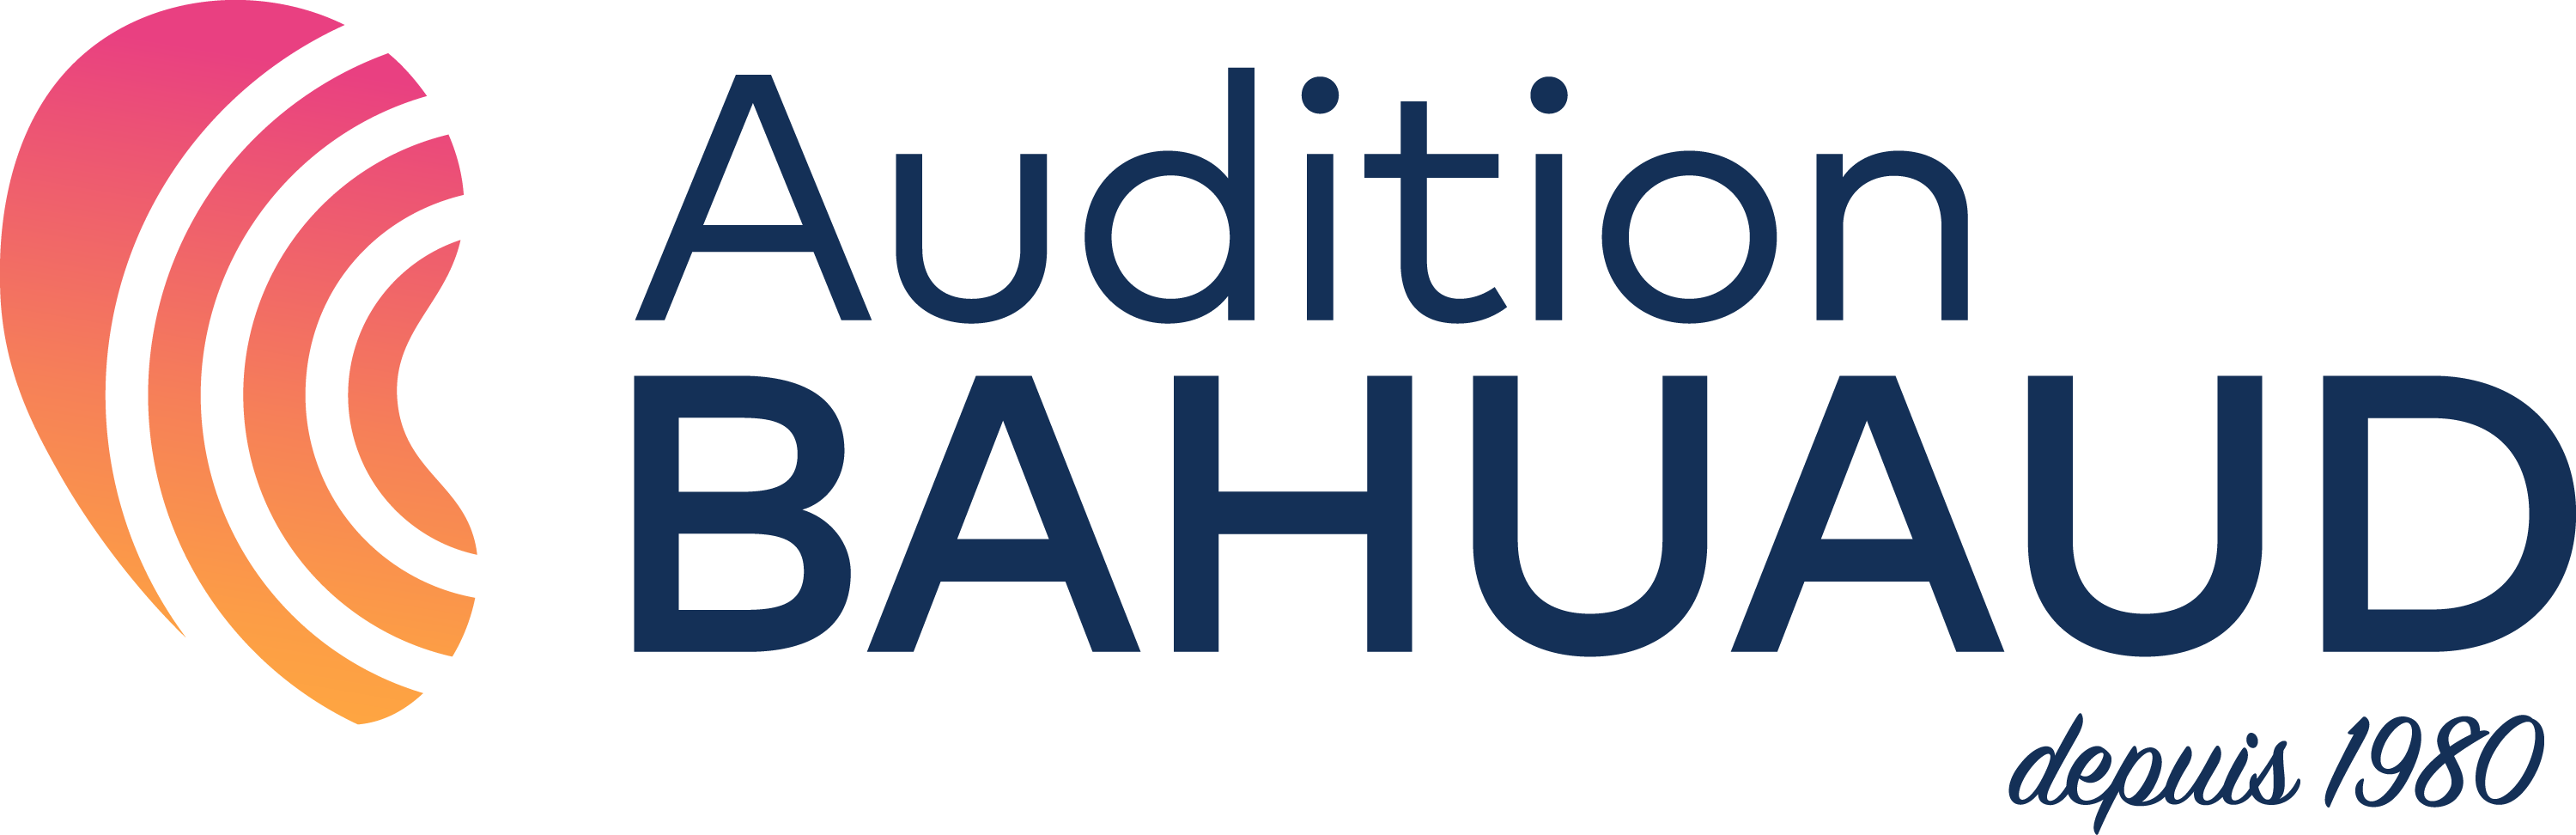 Logo Audition BAHUAUD